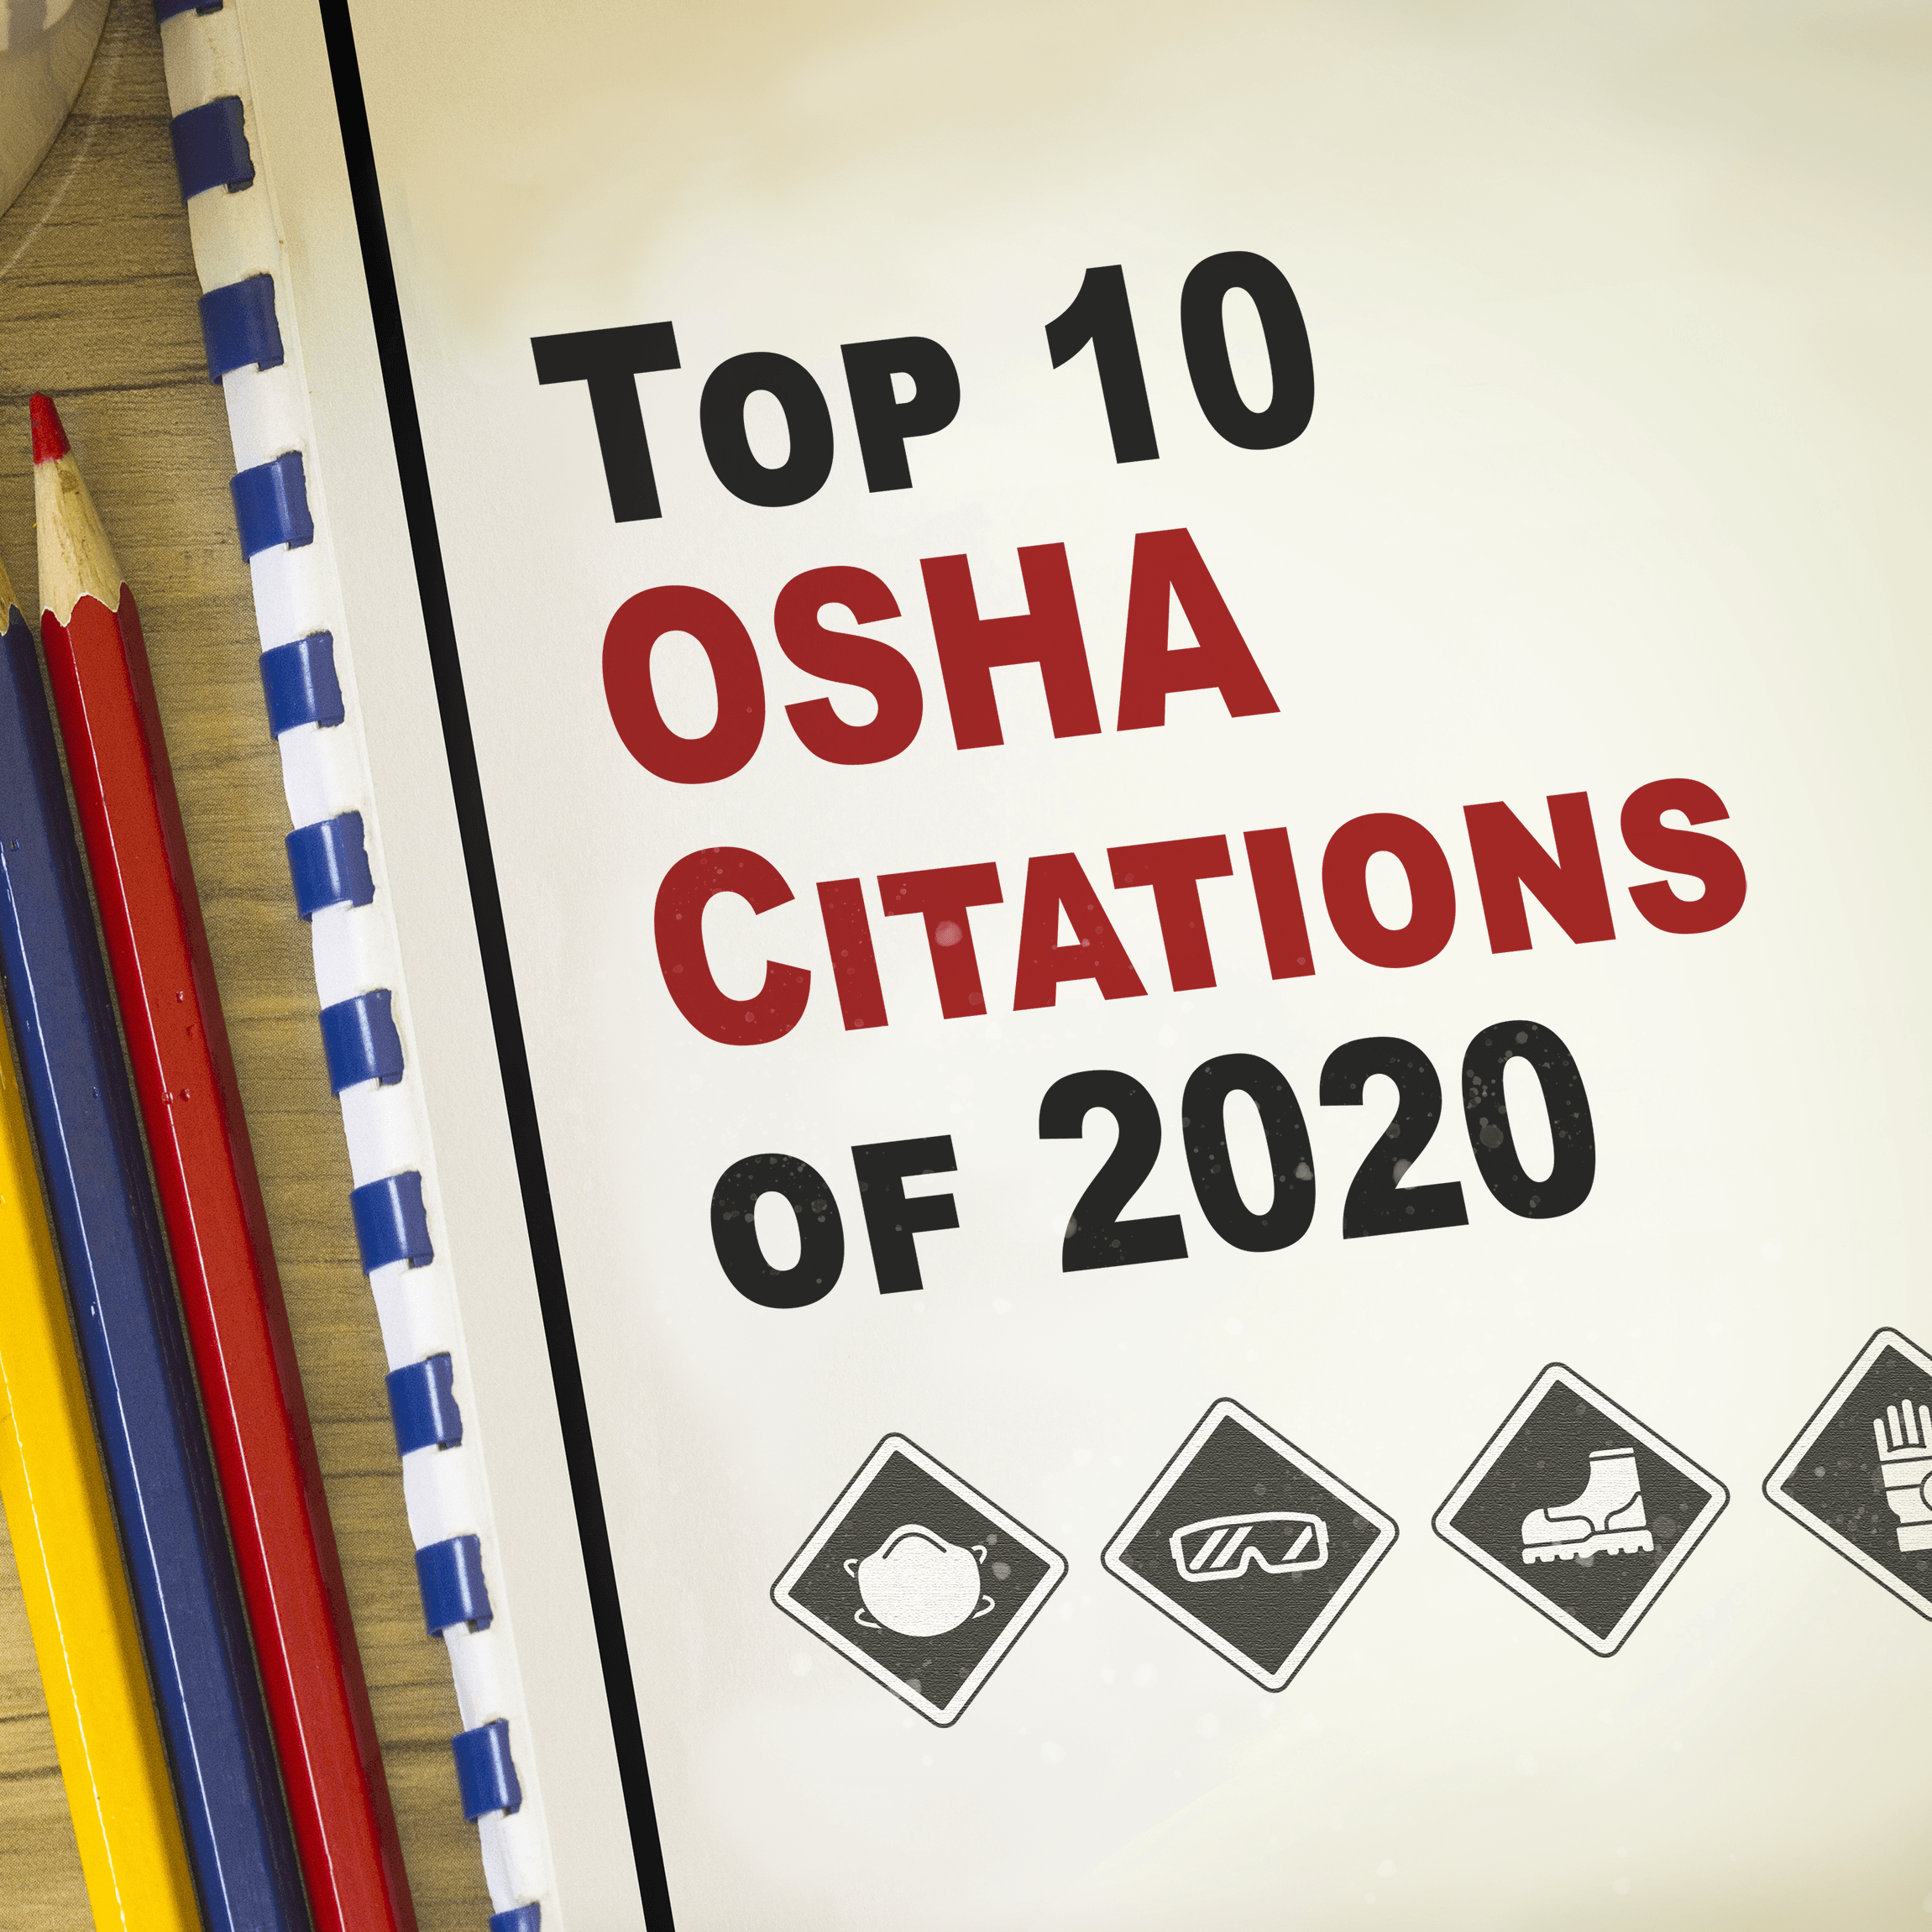 OSHA’s Top 10 List of Citations for 2020